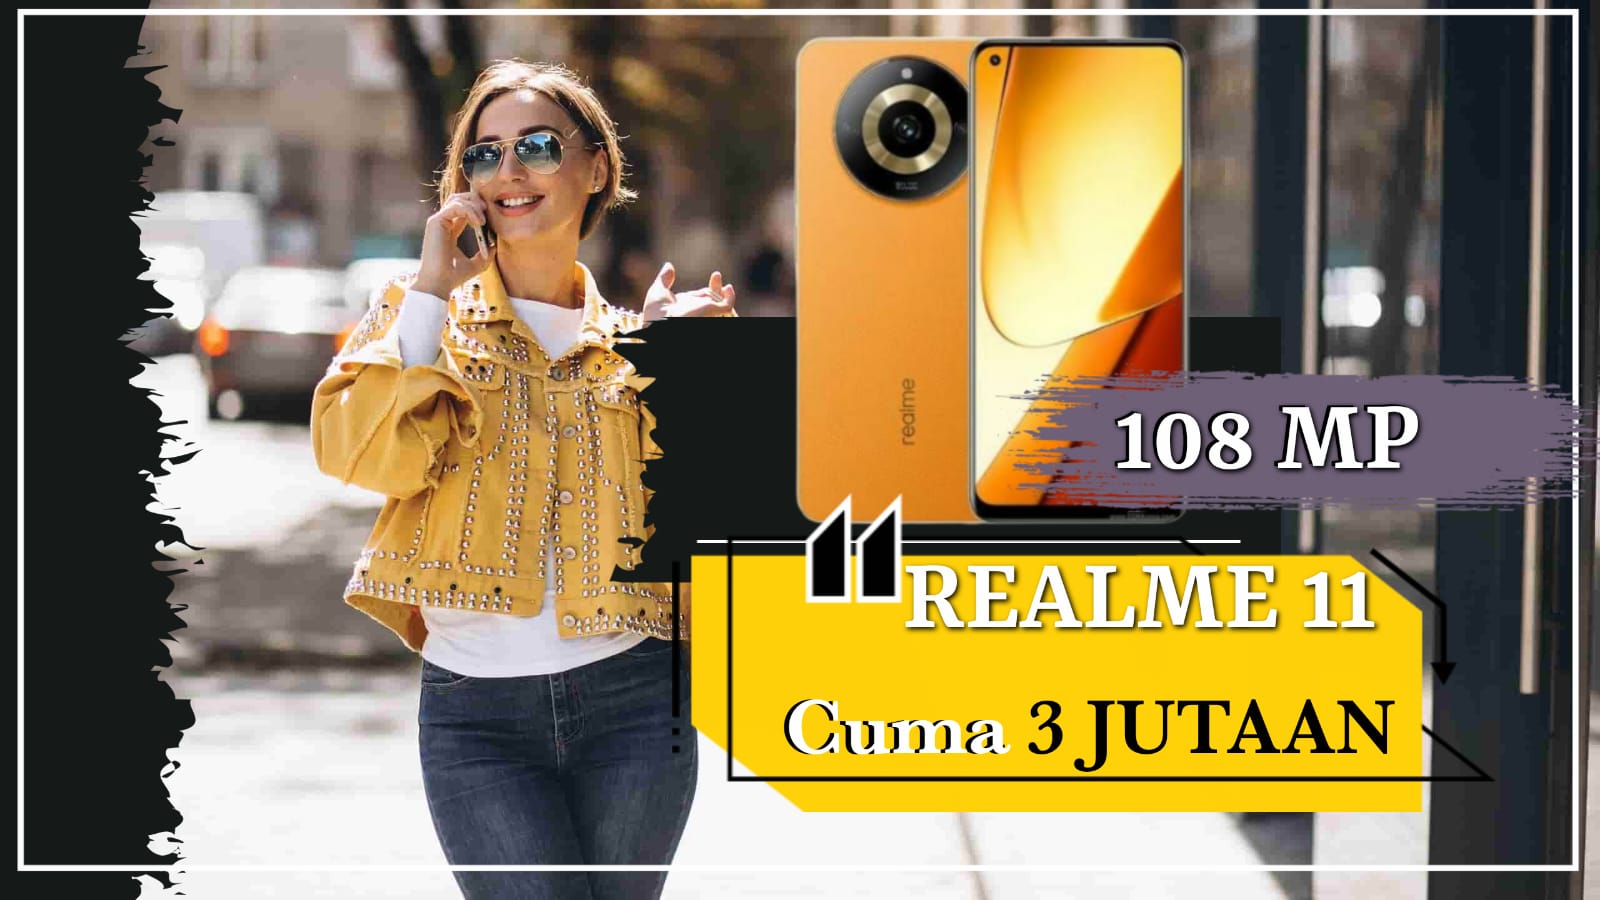 108 MP Cuma 3 Jutaan: Realme 11, Solusi HP Terbaik untuk Selfie dan Fotografi!